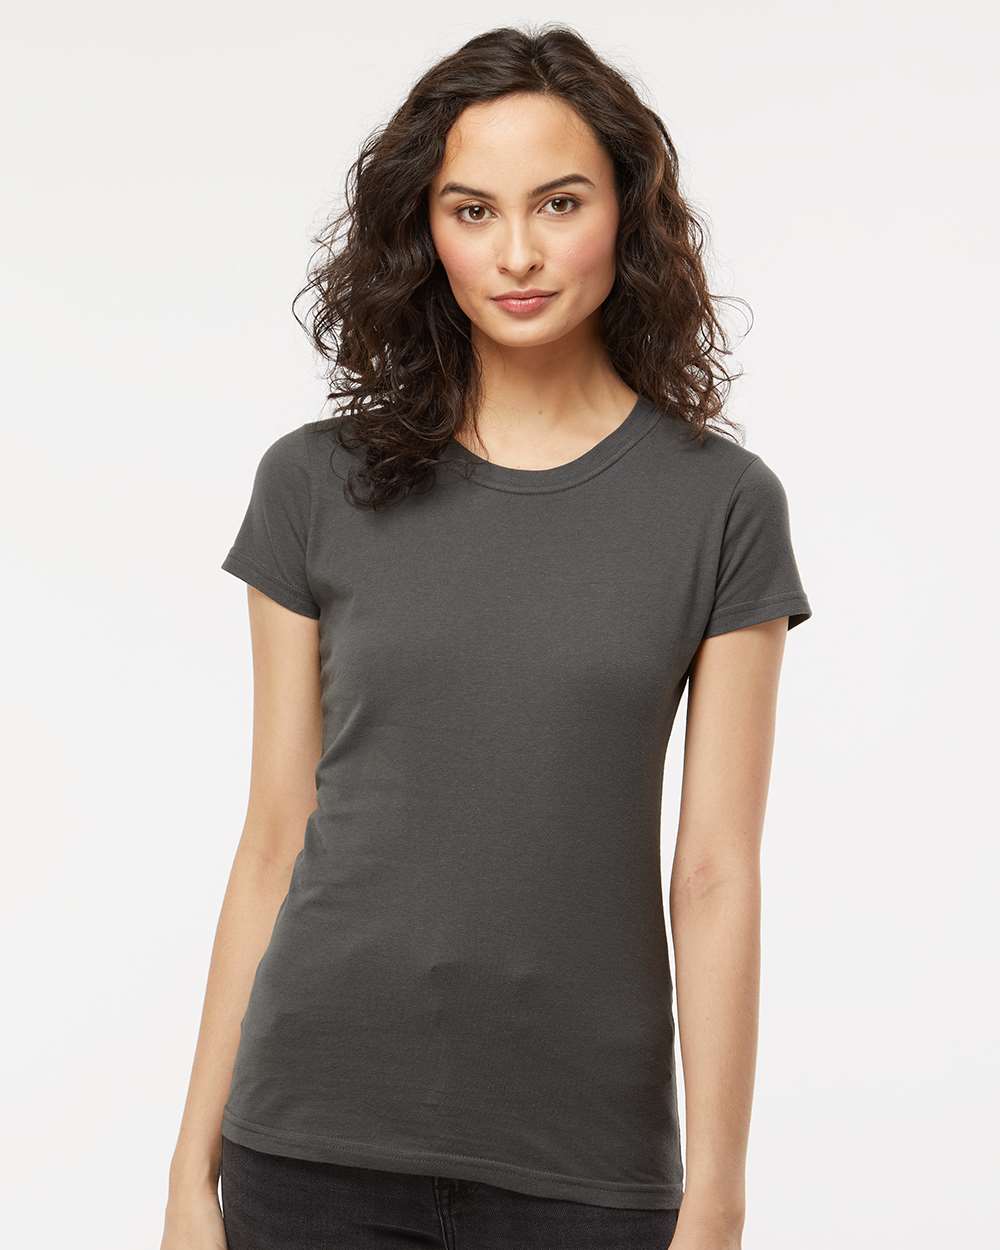 M&O Women's Fine Jersey T-Shirt 4513 #colormdl_Fine Charcoal